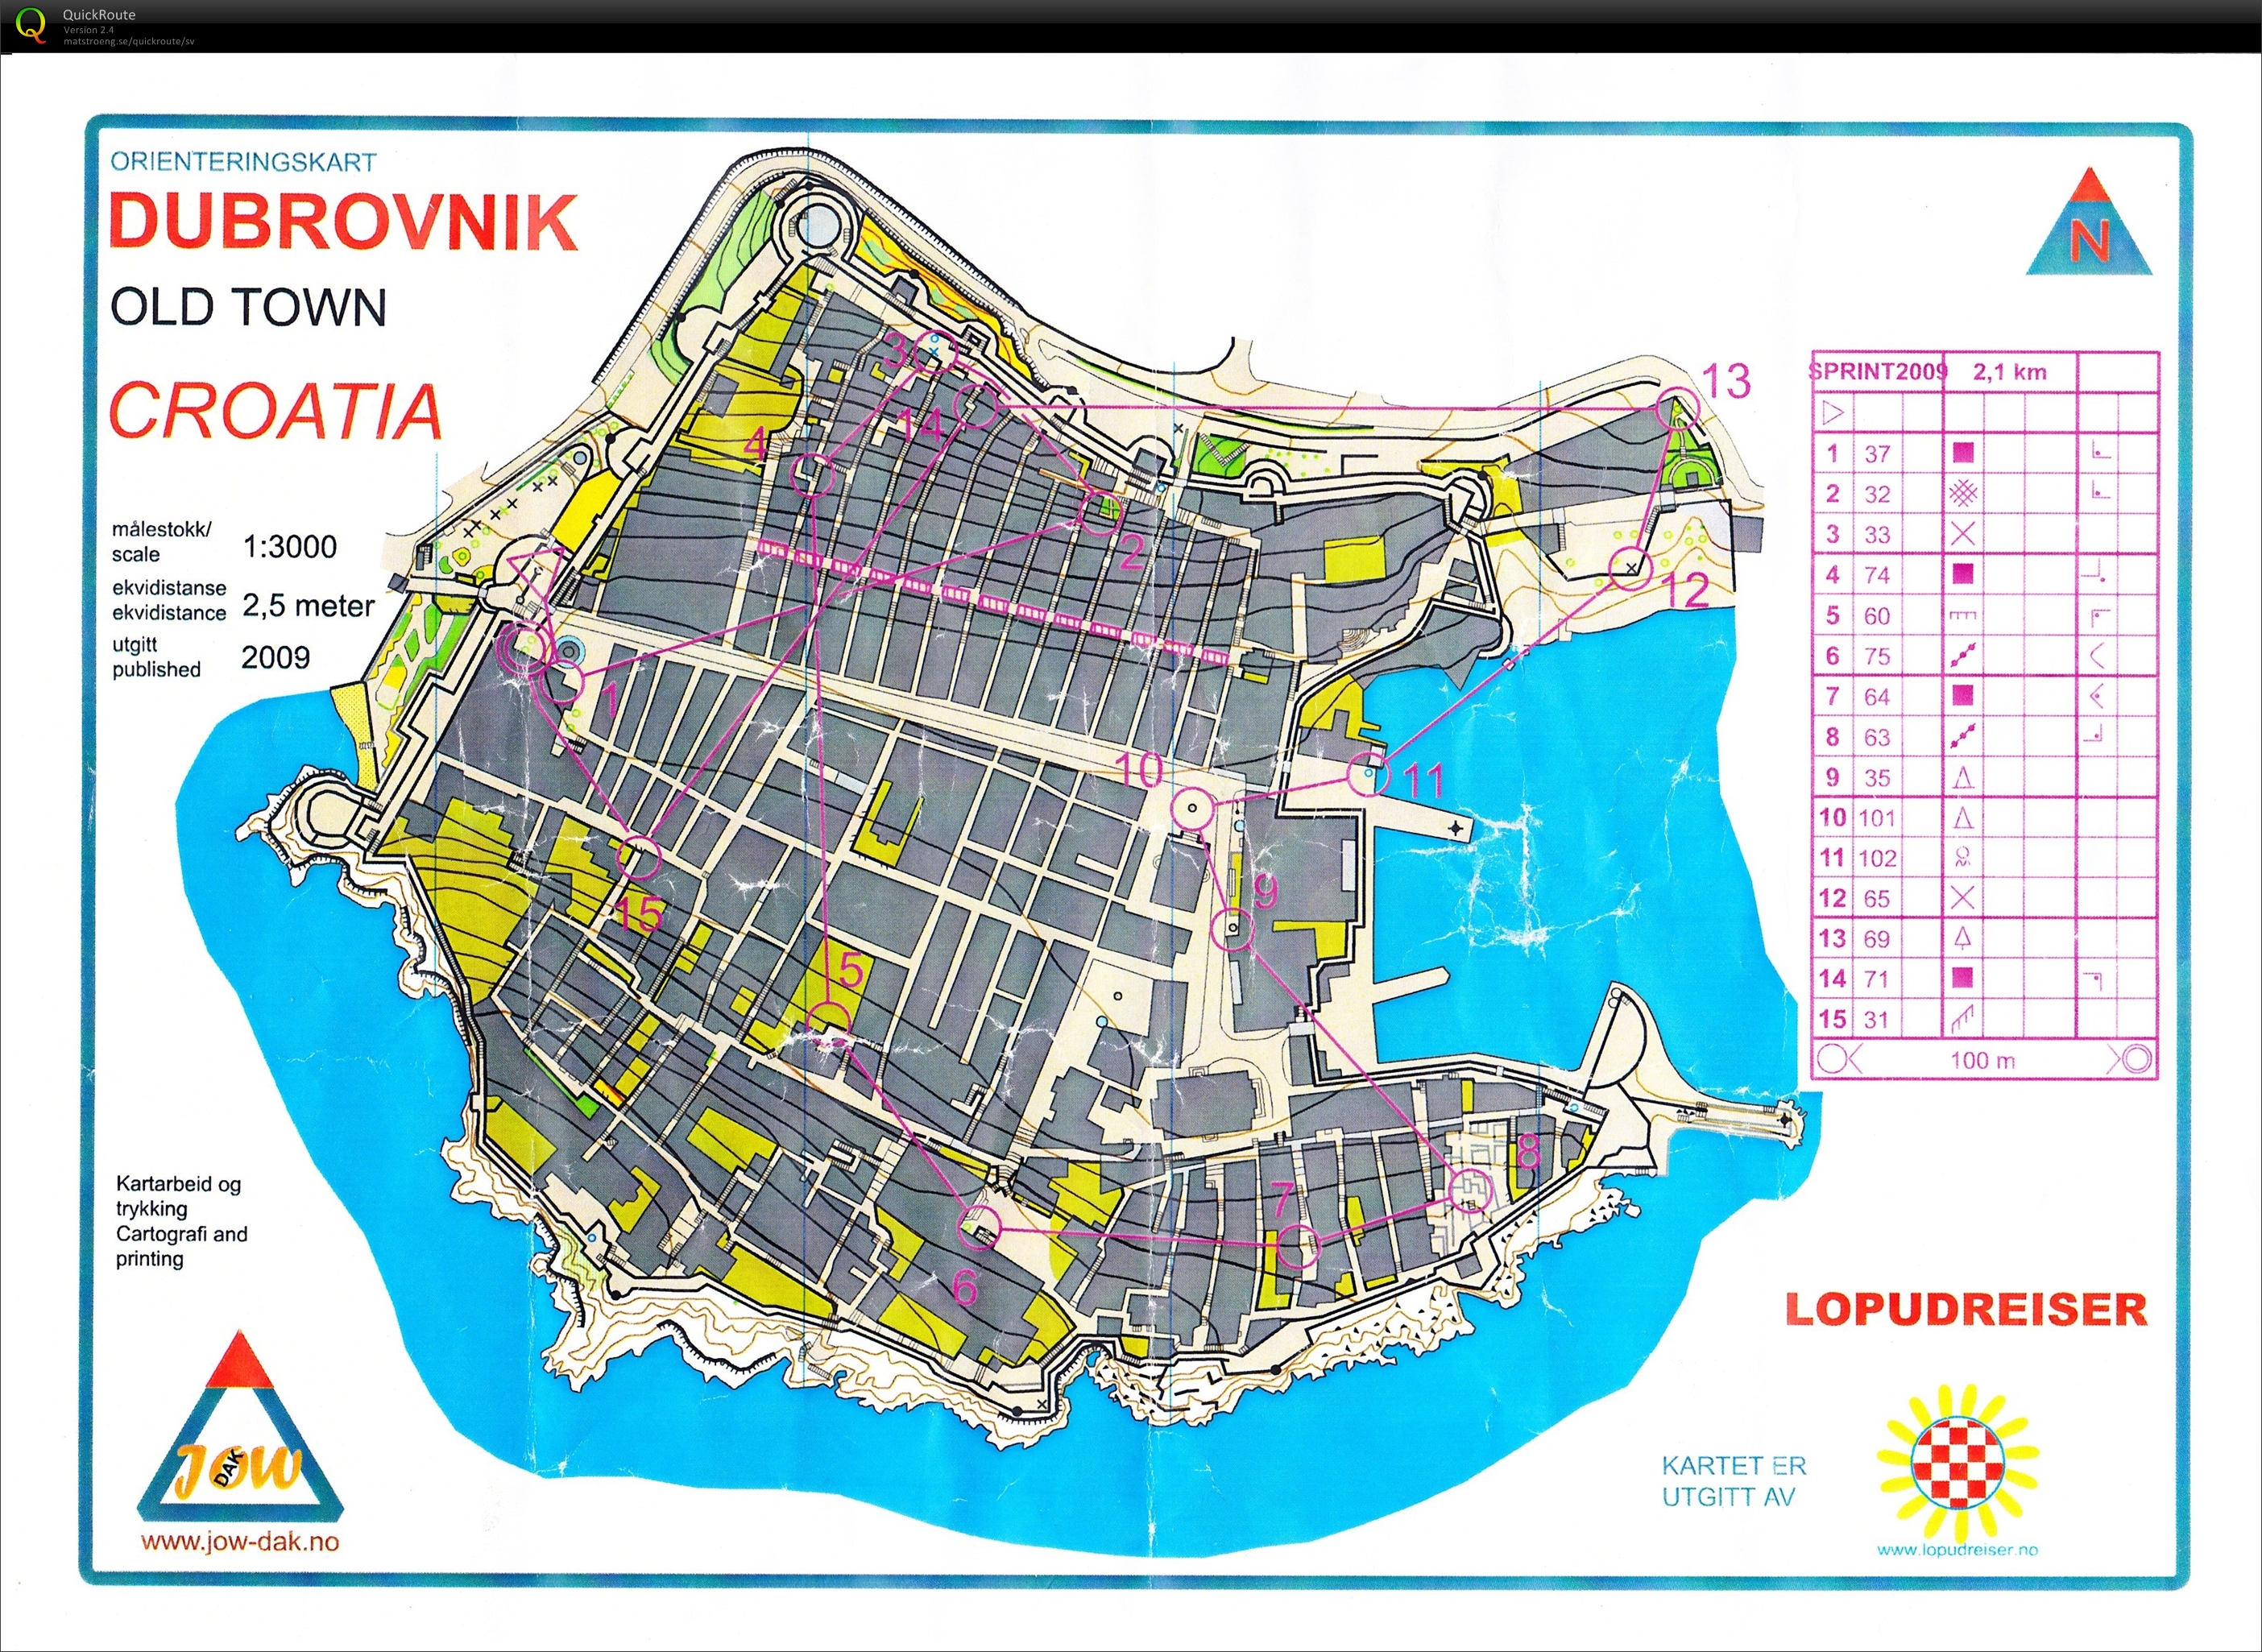 Sprinttrening, Dubrovnik (2013-07-27)